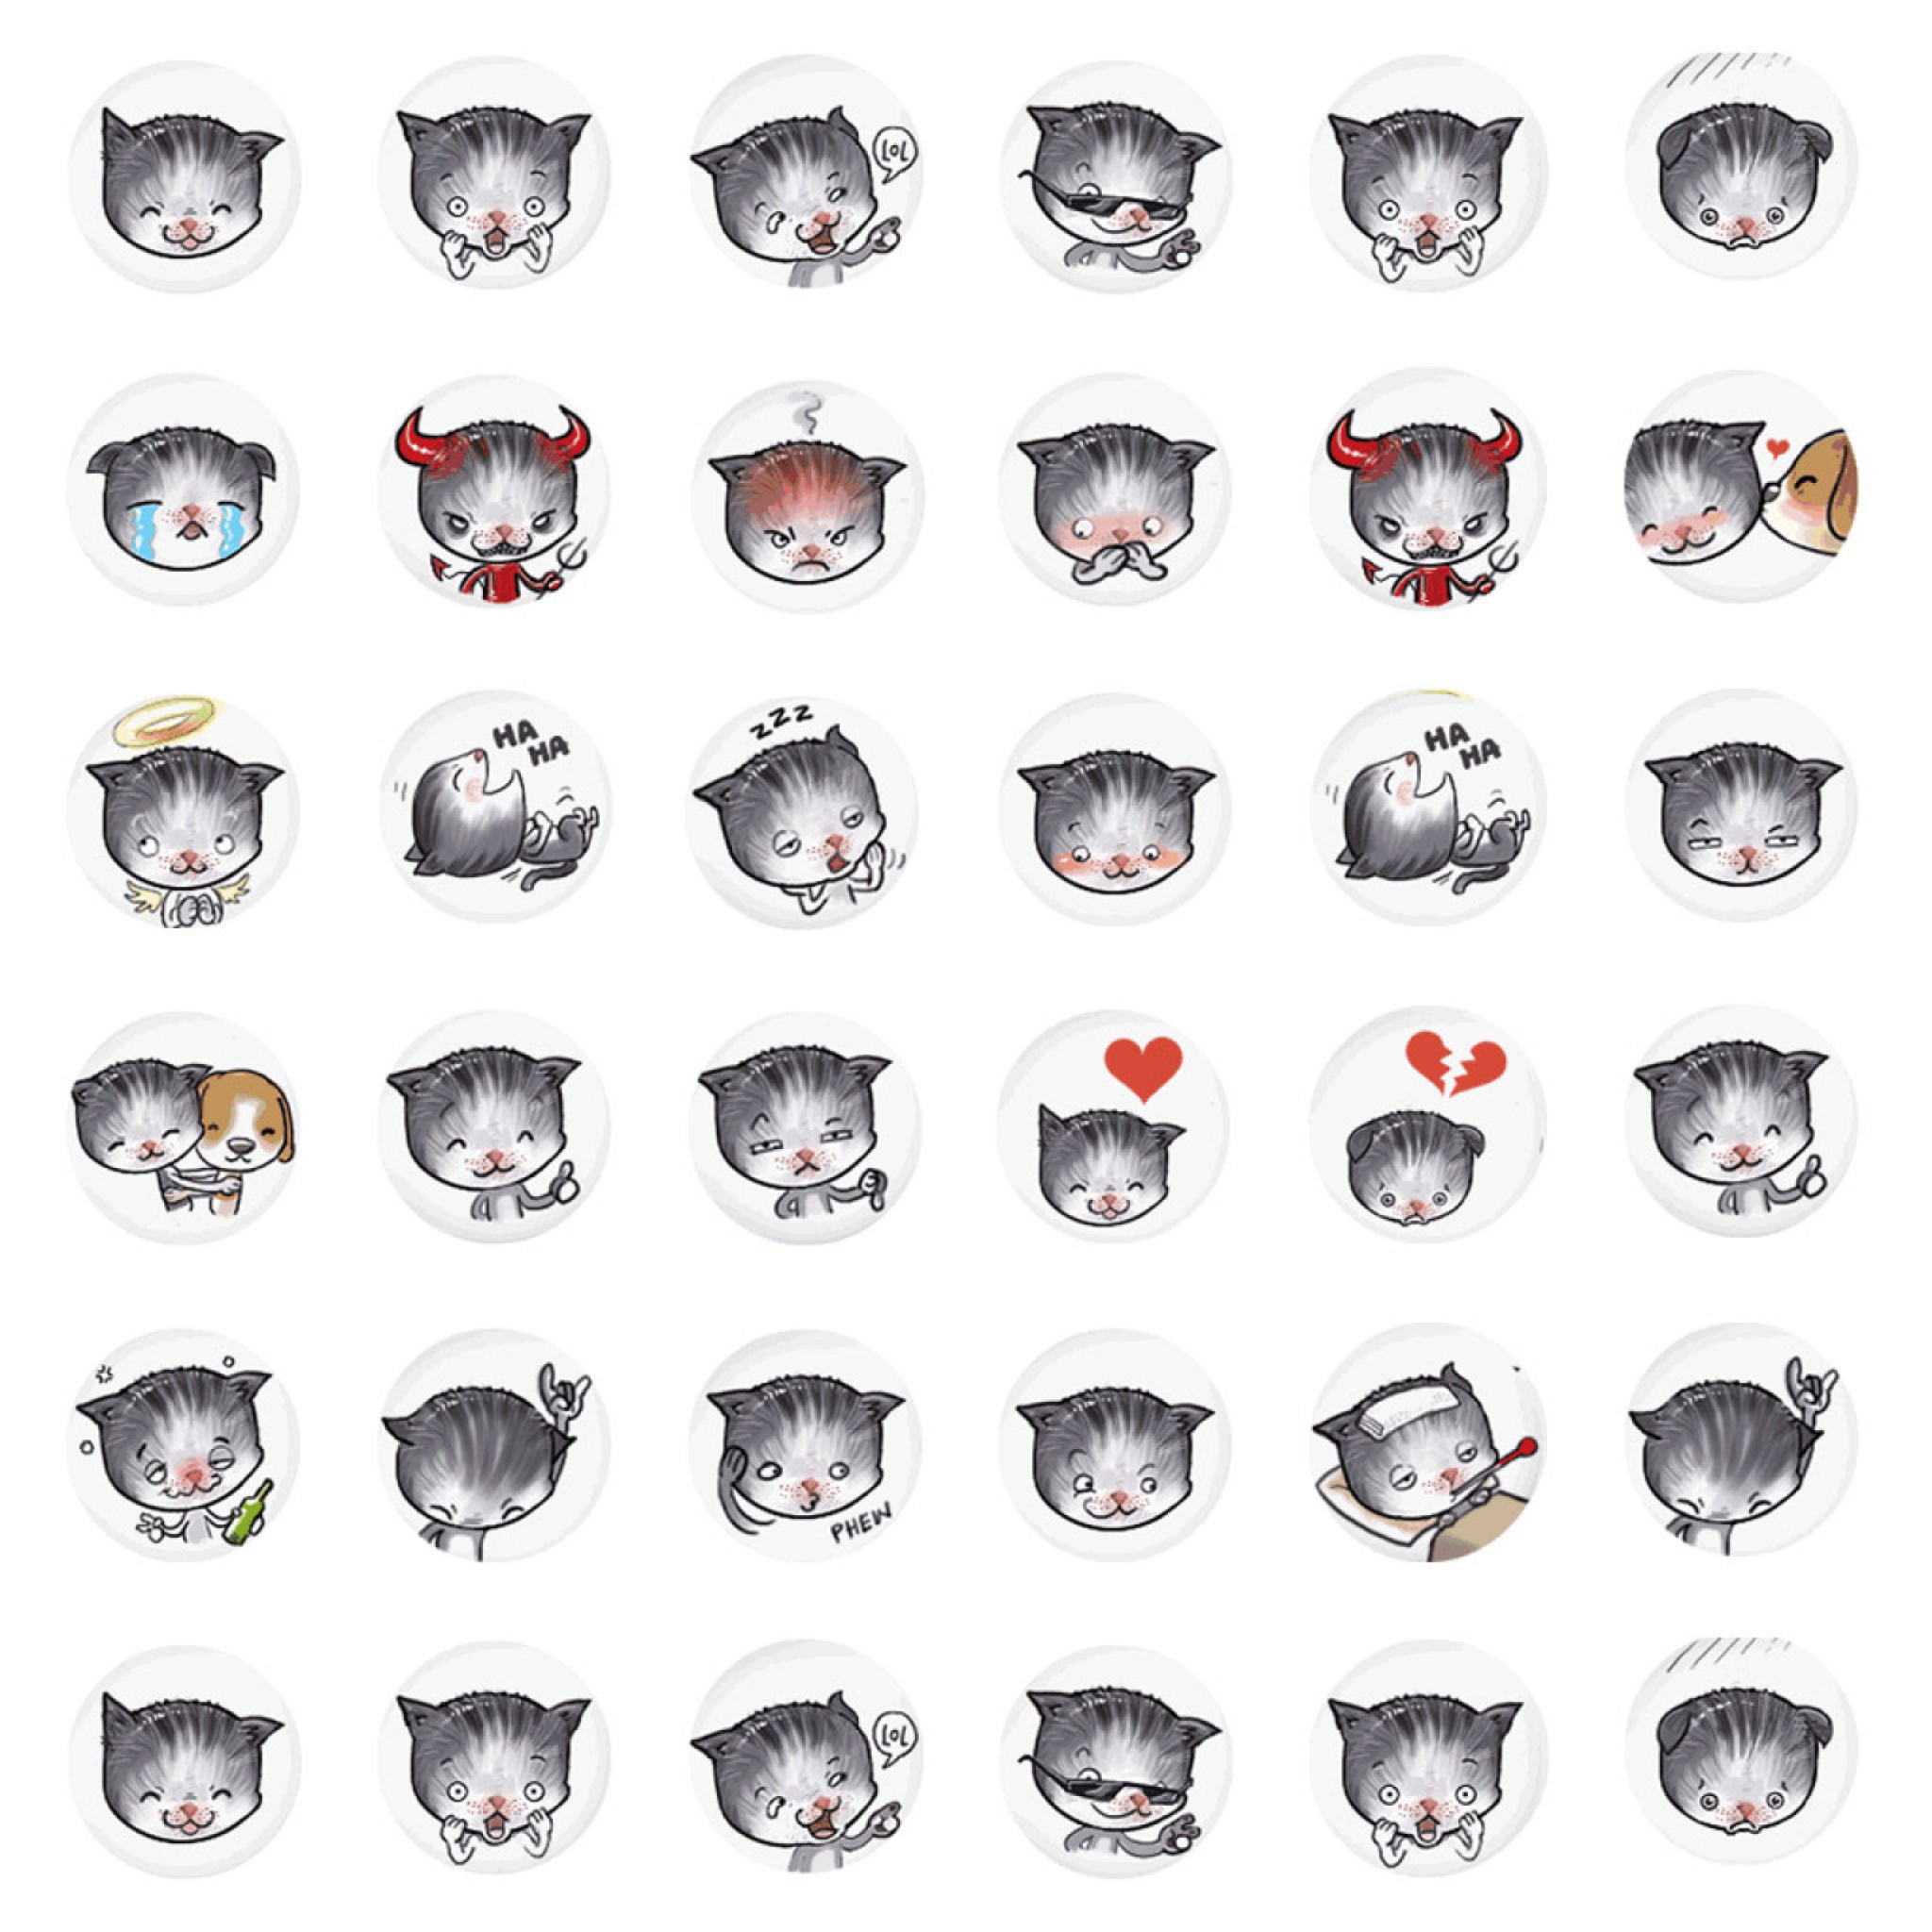 Funny Cat Drawings wallpaper 2048x2048